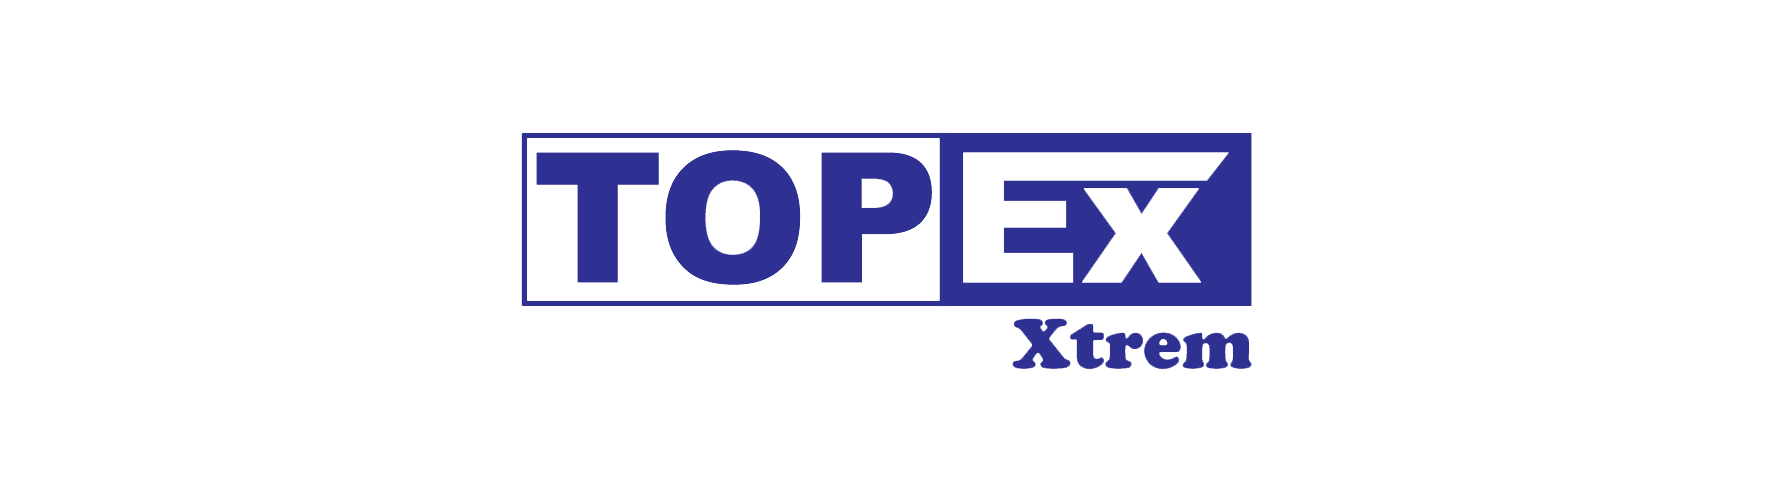 Topex Xtrem